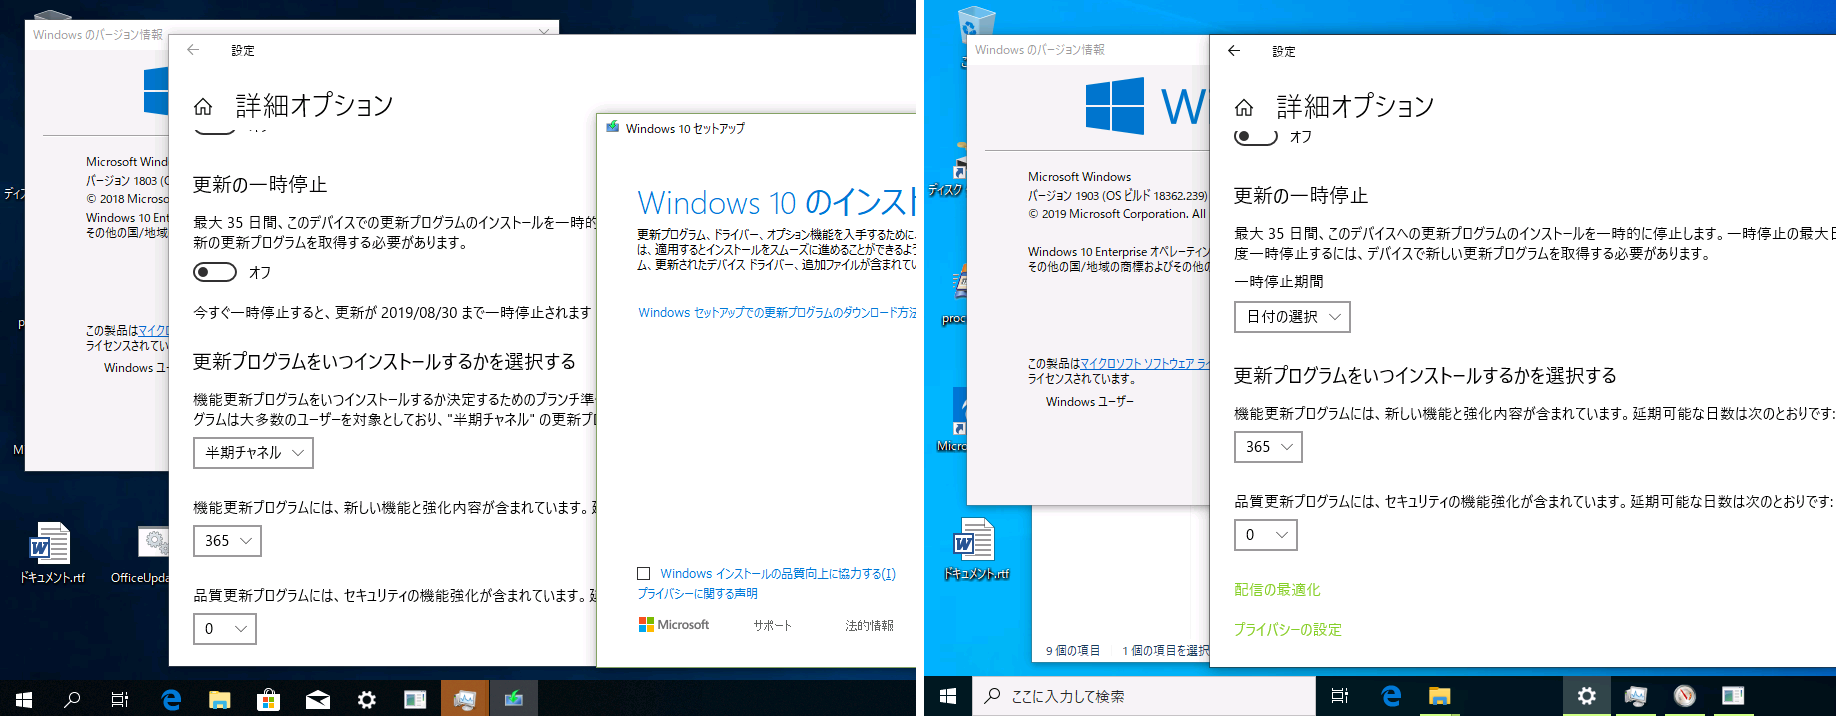 1@Windows 10 o[W1903ɂWUfB̉̐ݒ݂̂pBSAC-TSAC̑IIvV͔p~iSSACj